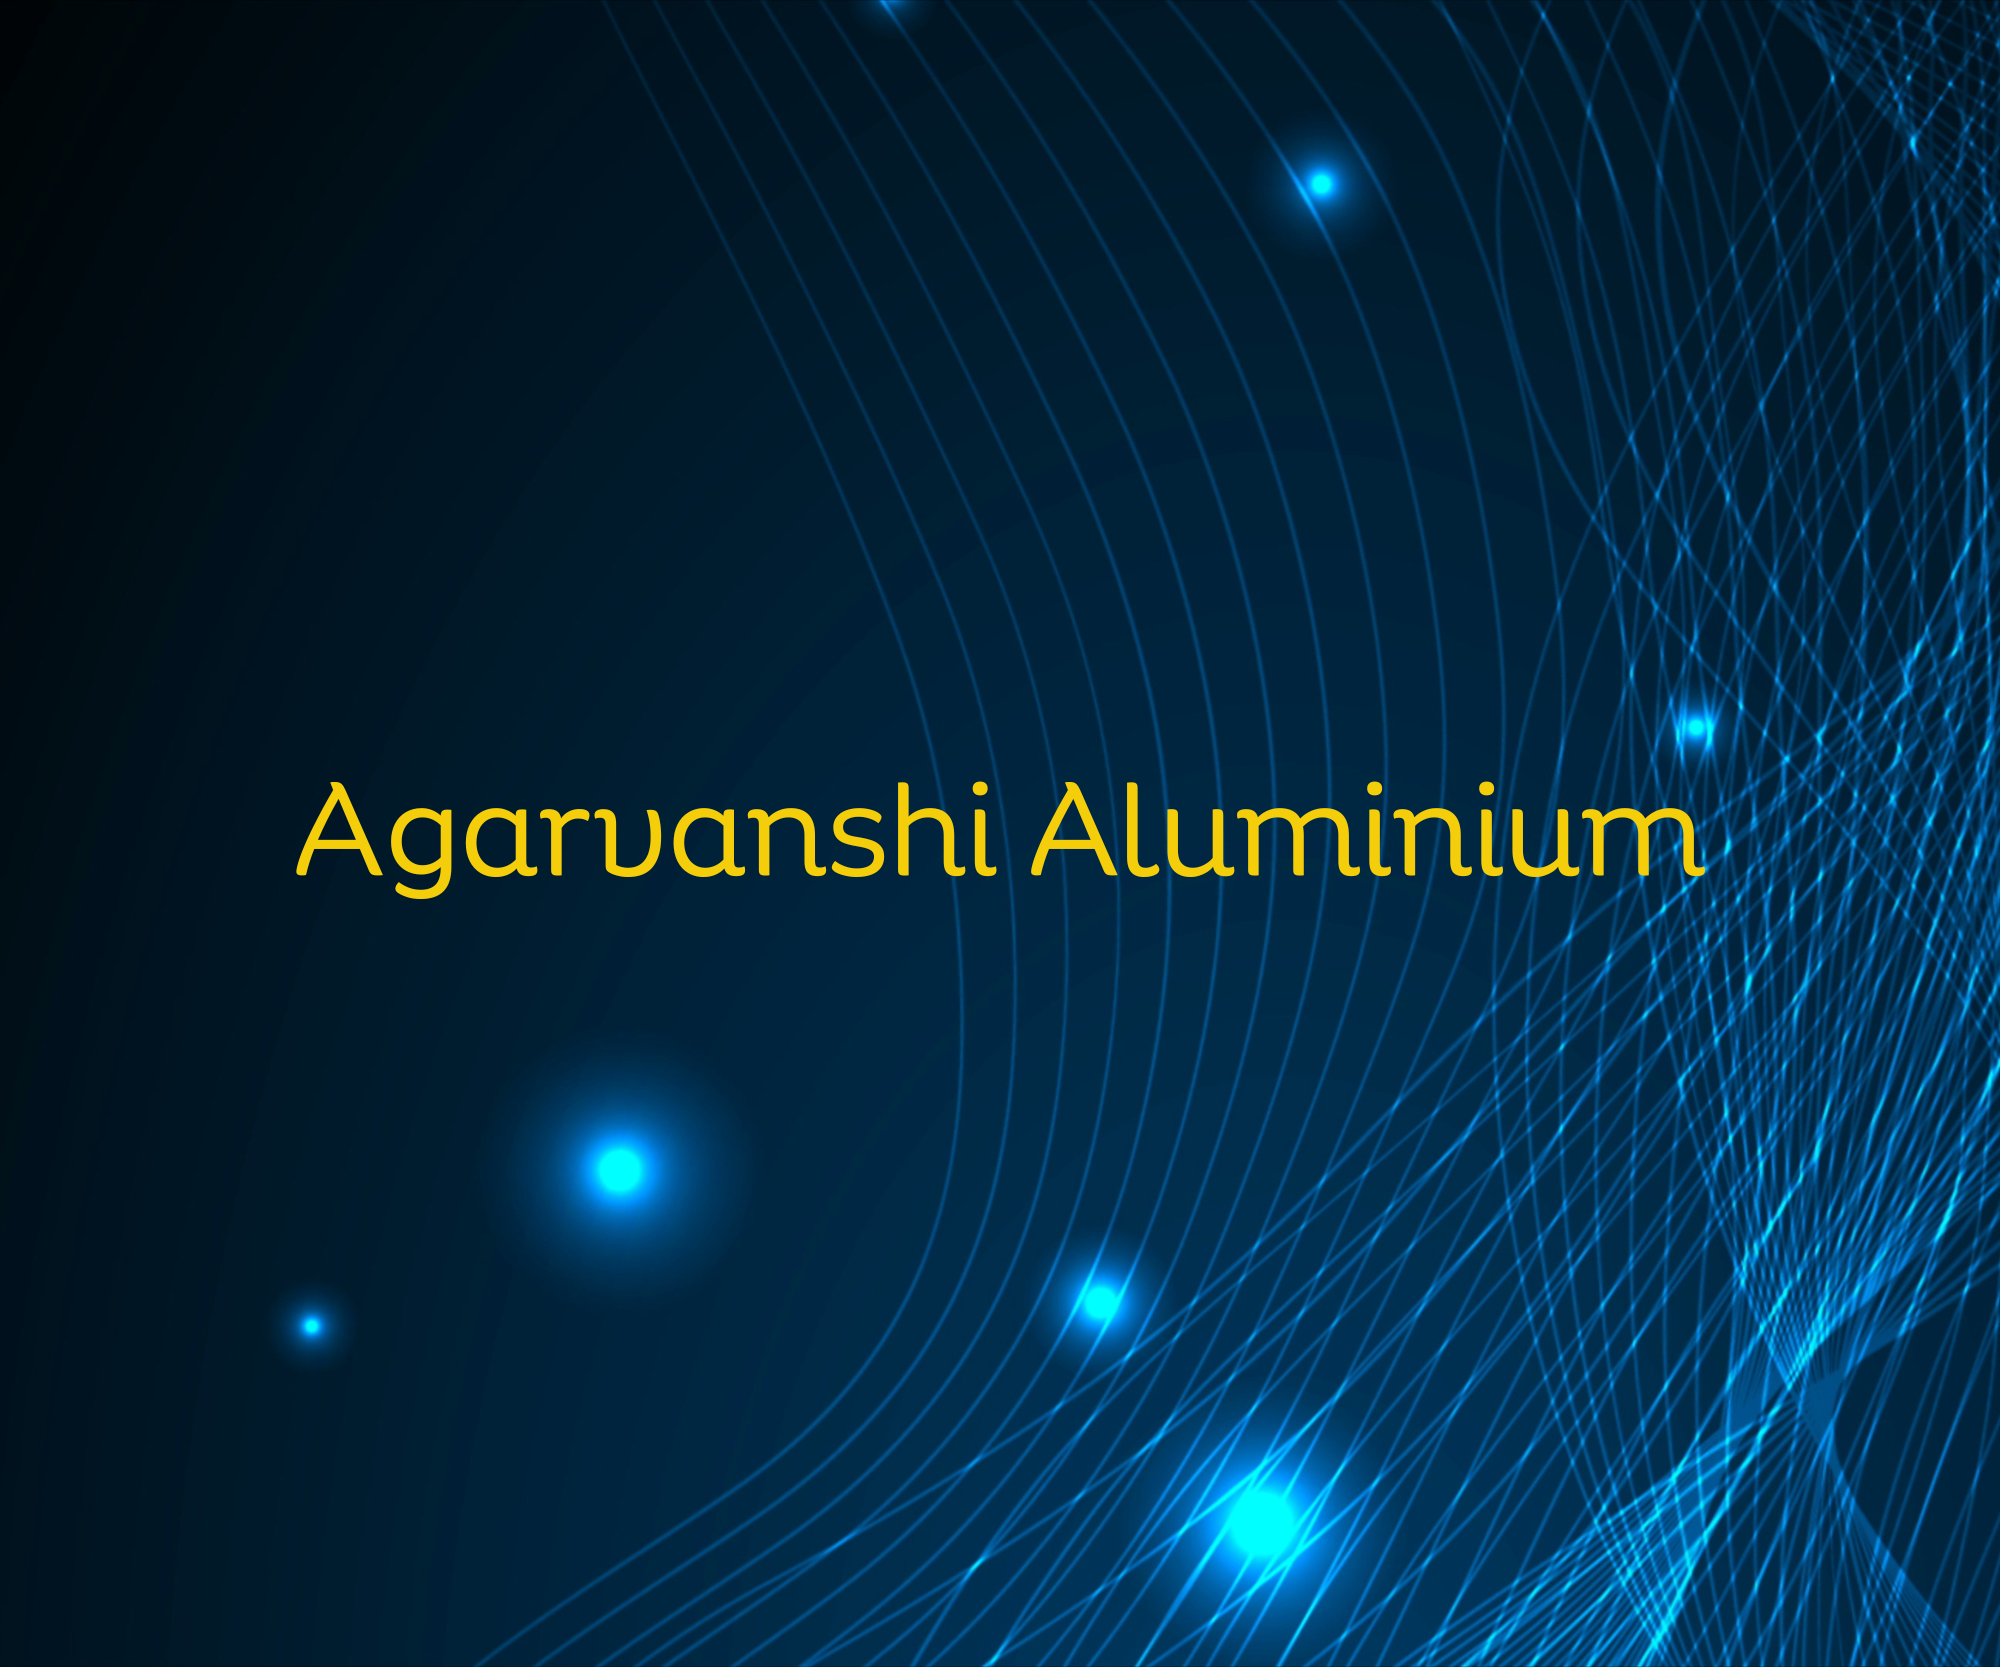 Agarvanshi Aluminium,   